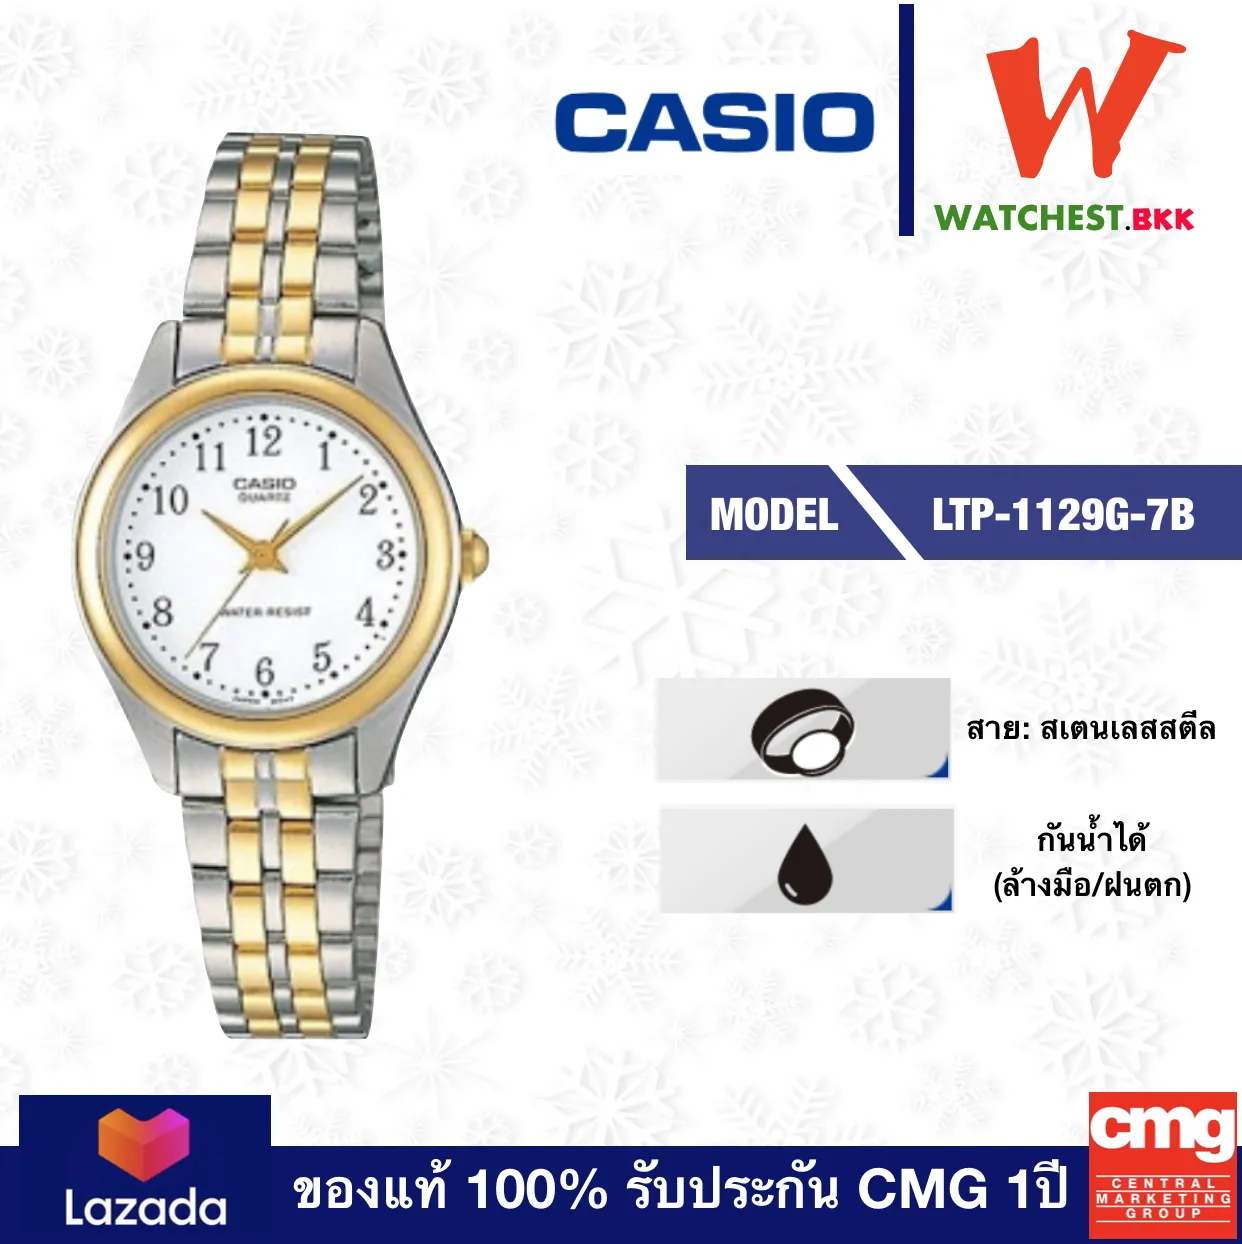 casio นาฬิกาผู้หญิง สายสเตนเลส รุ่น LTP-1129G-7B, คาสิโอ LTP-1129, LTP-1129G สายเหล็ก ตัวล็อกบานพับ (watchestbkk คาสิโอ แท้ ของแท้100% ประกัน CMG)